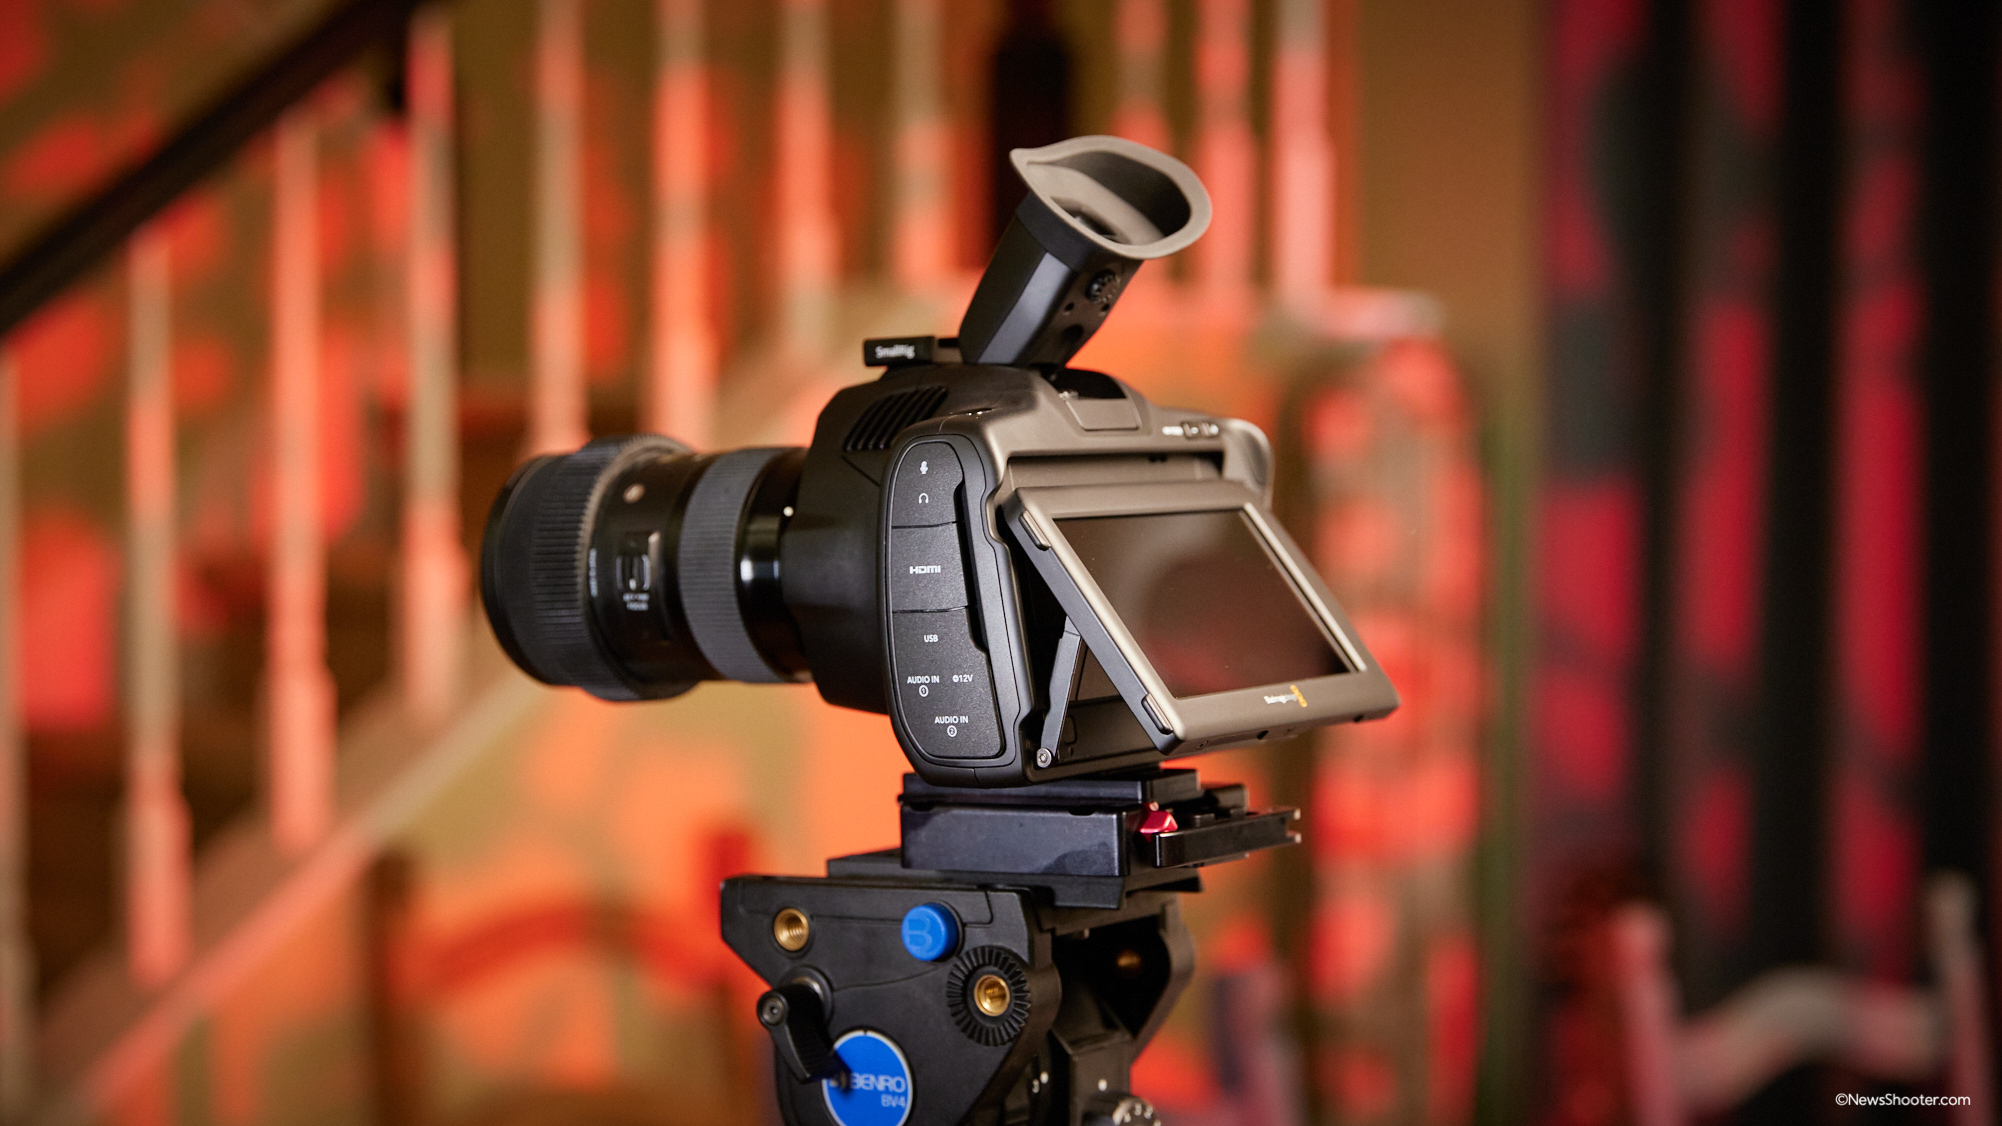 blackmagic pocket cinema camera 6k pro